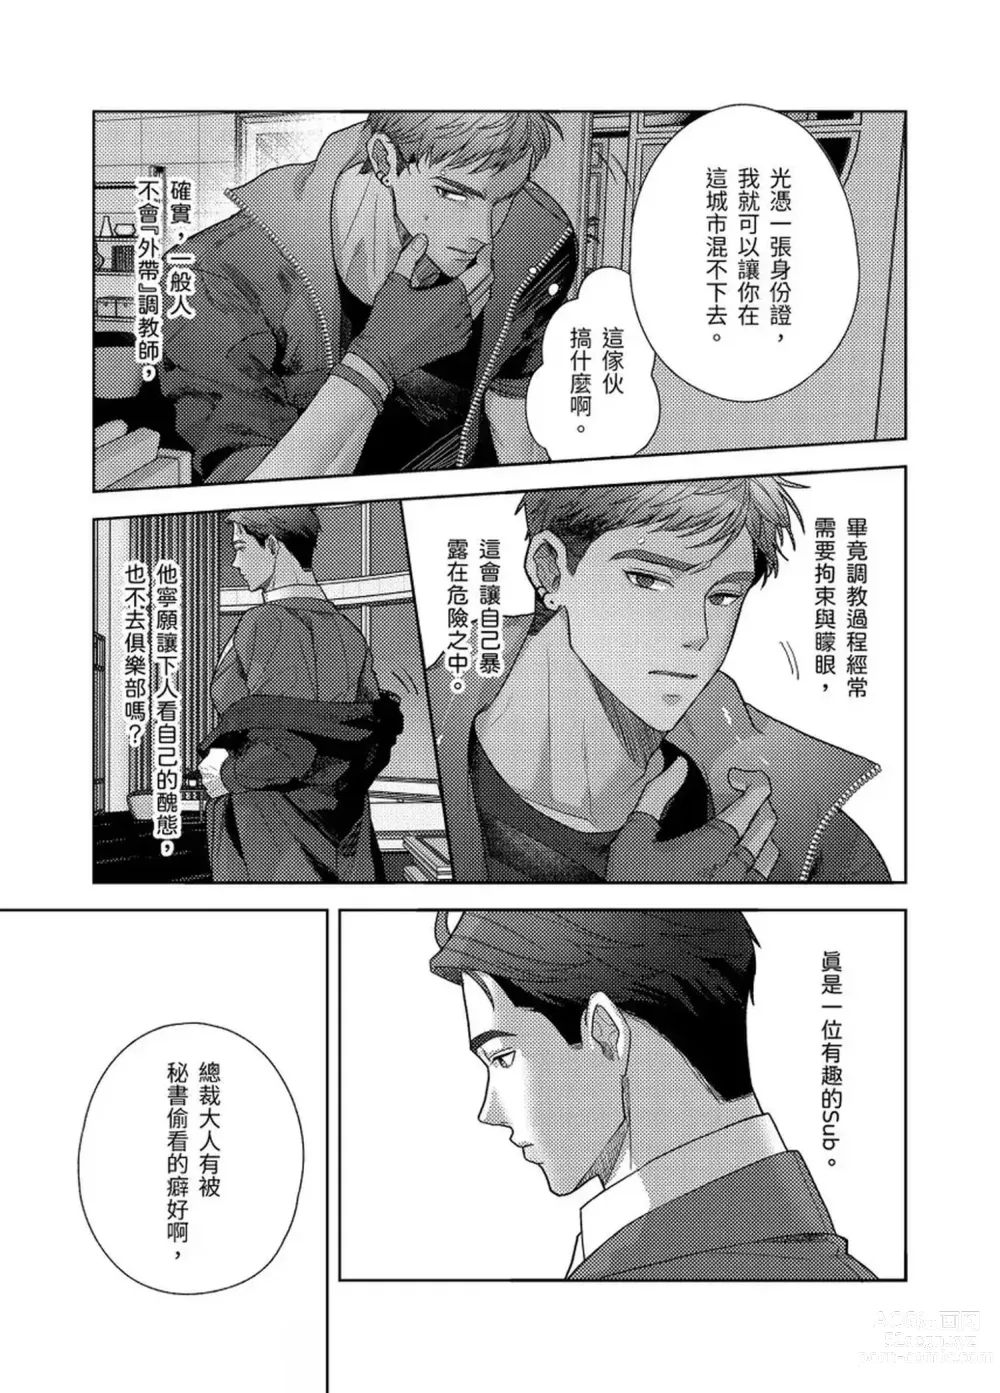 Page 10 of manga Dom&Sub